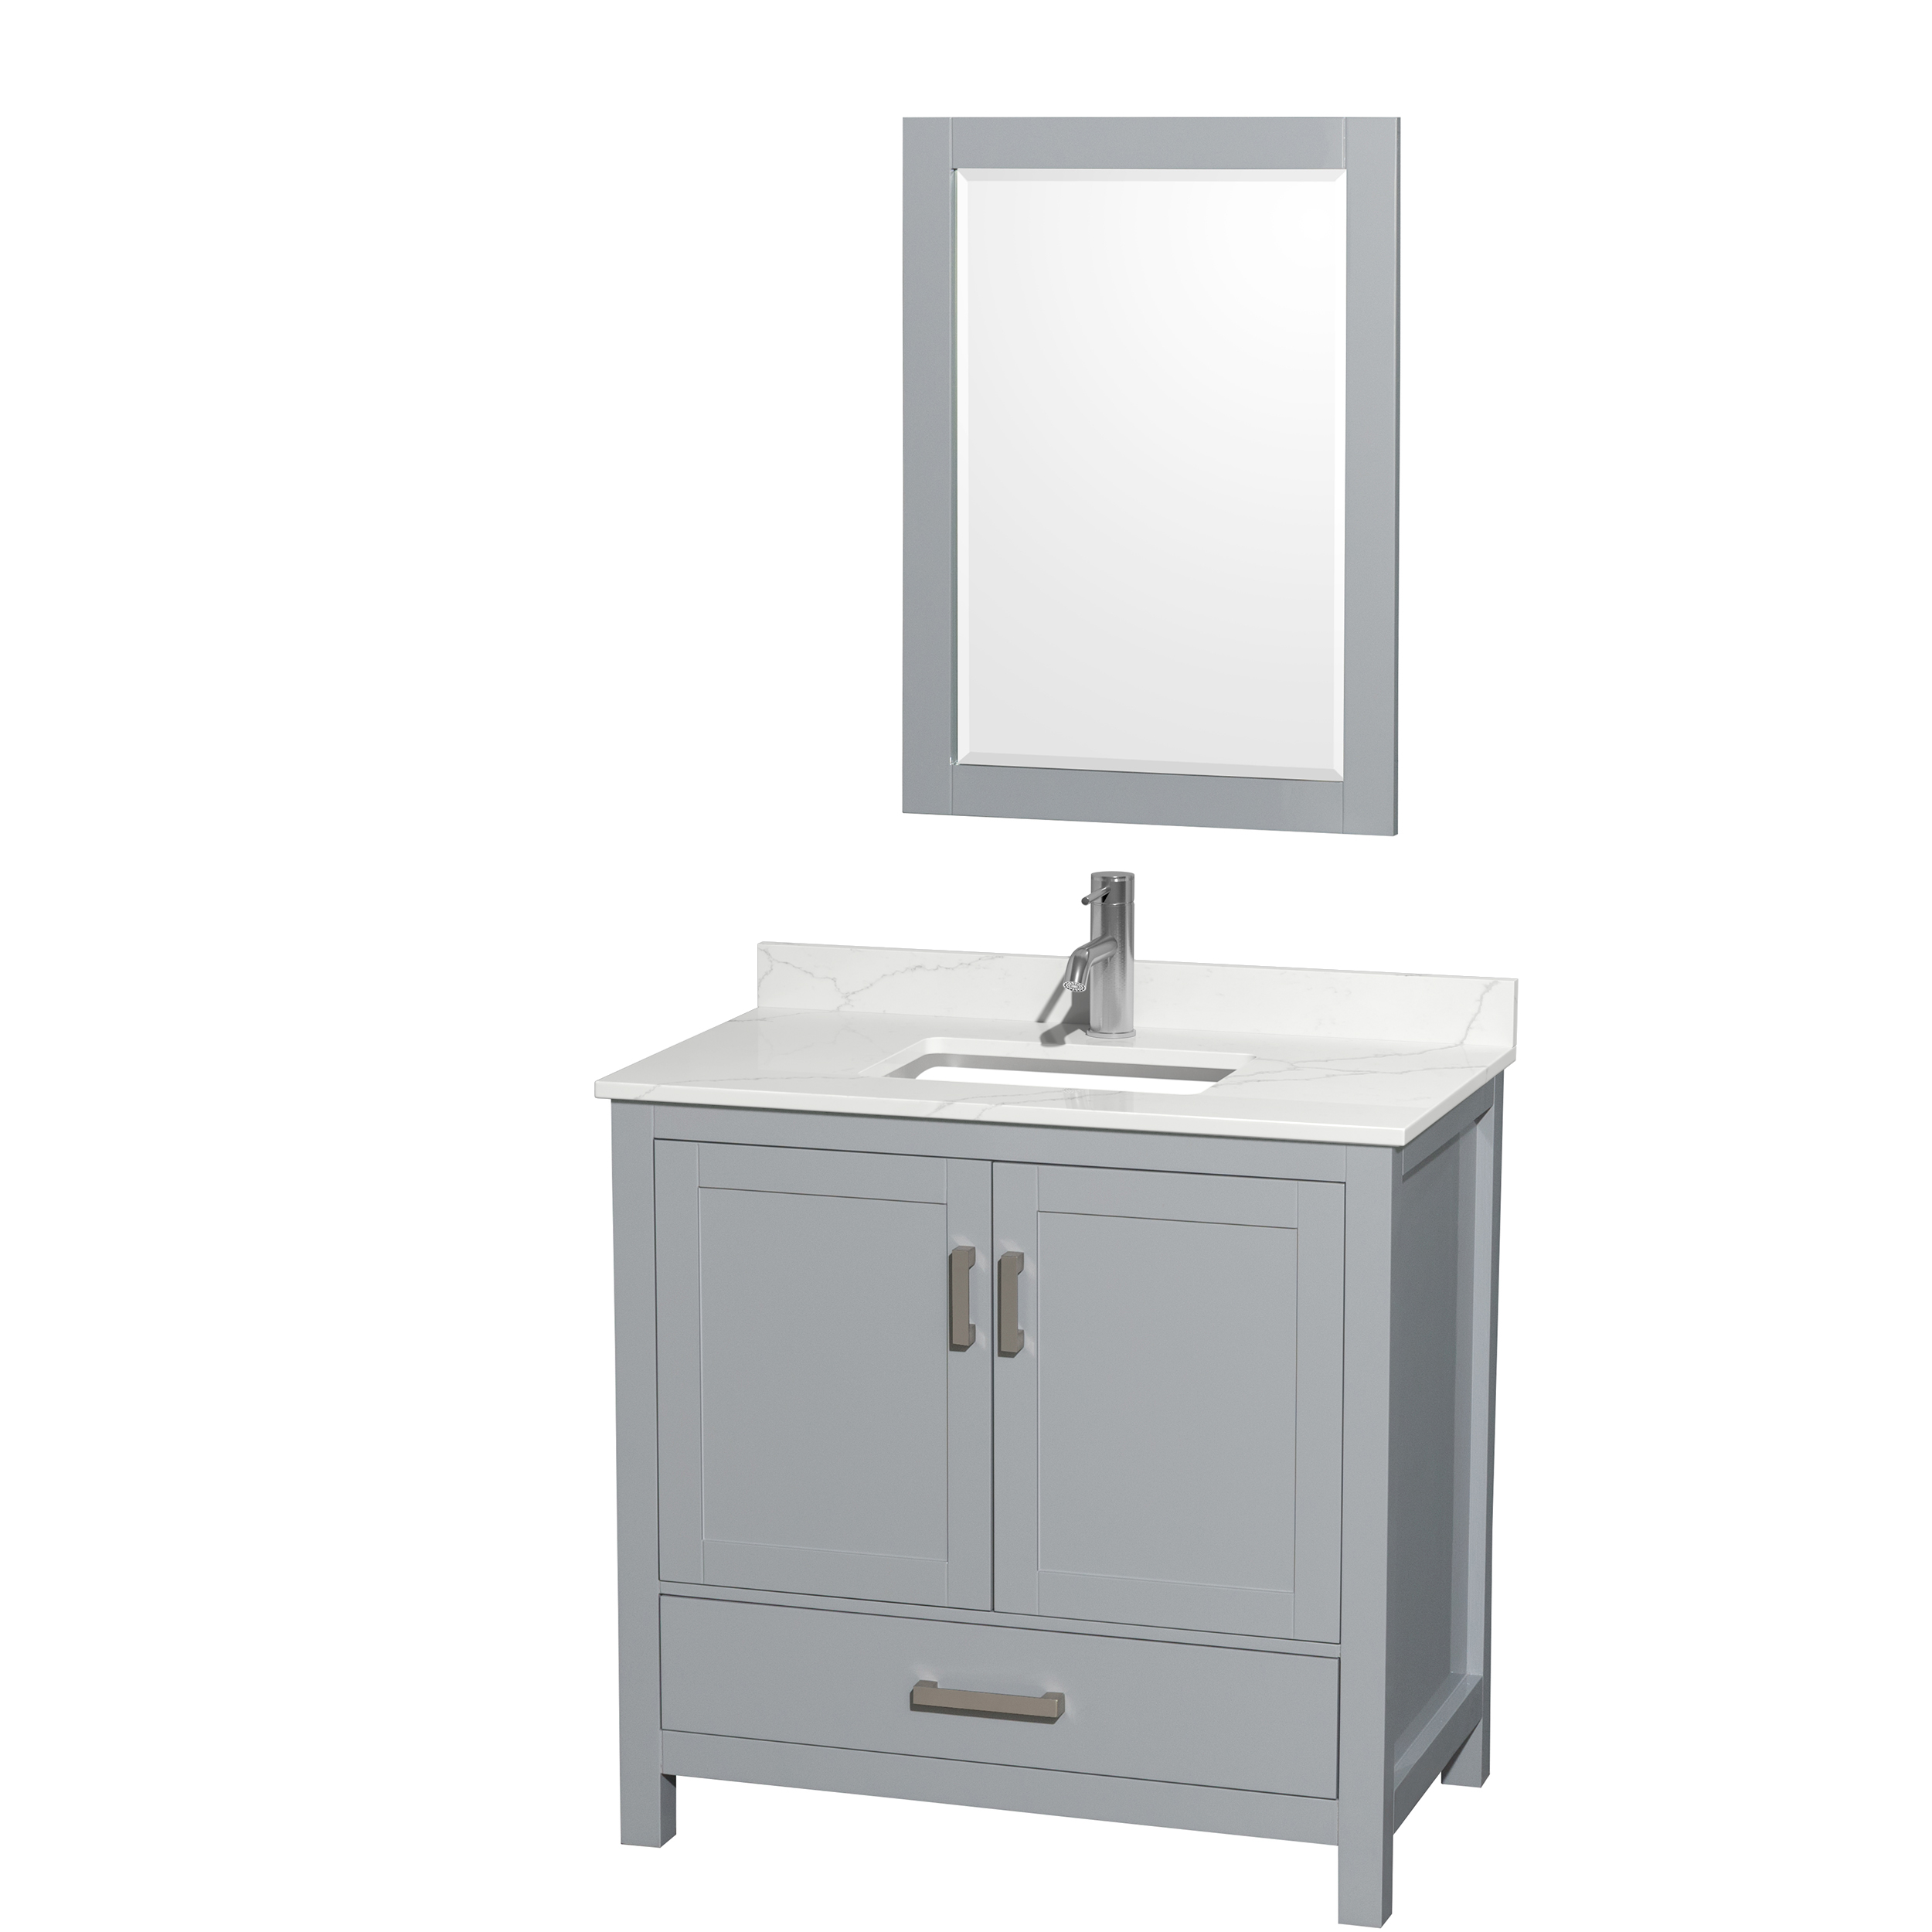 sheffield 36" single bathroom vanity by wyndham collection - gray